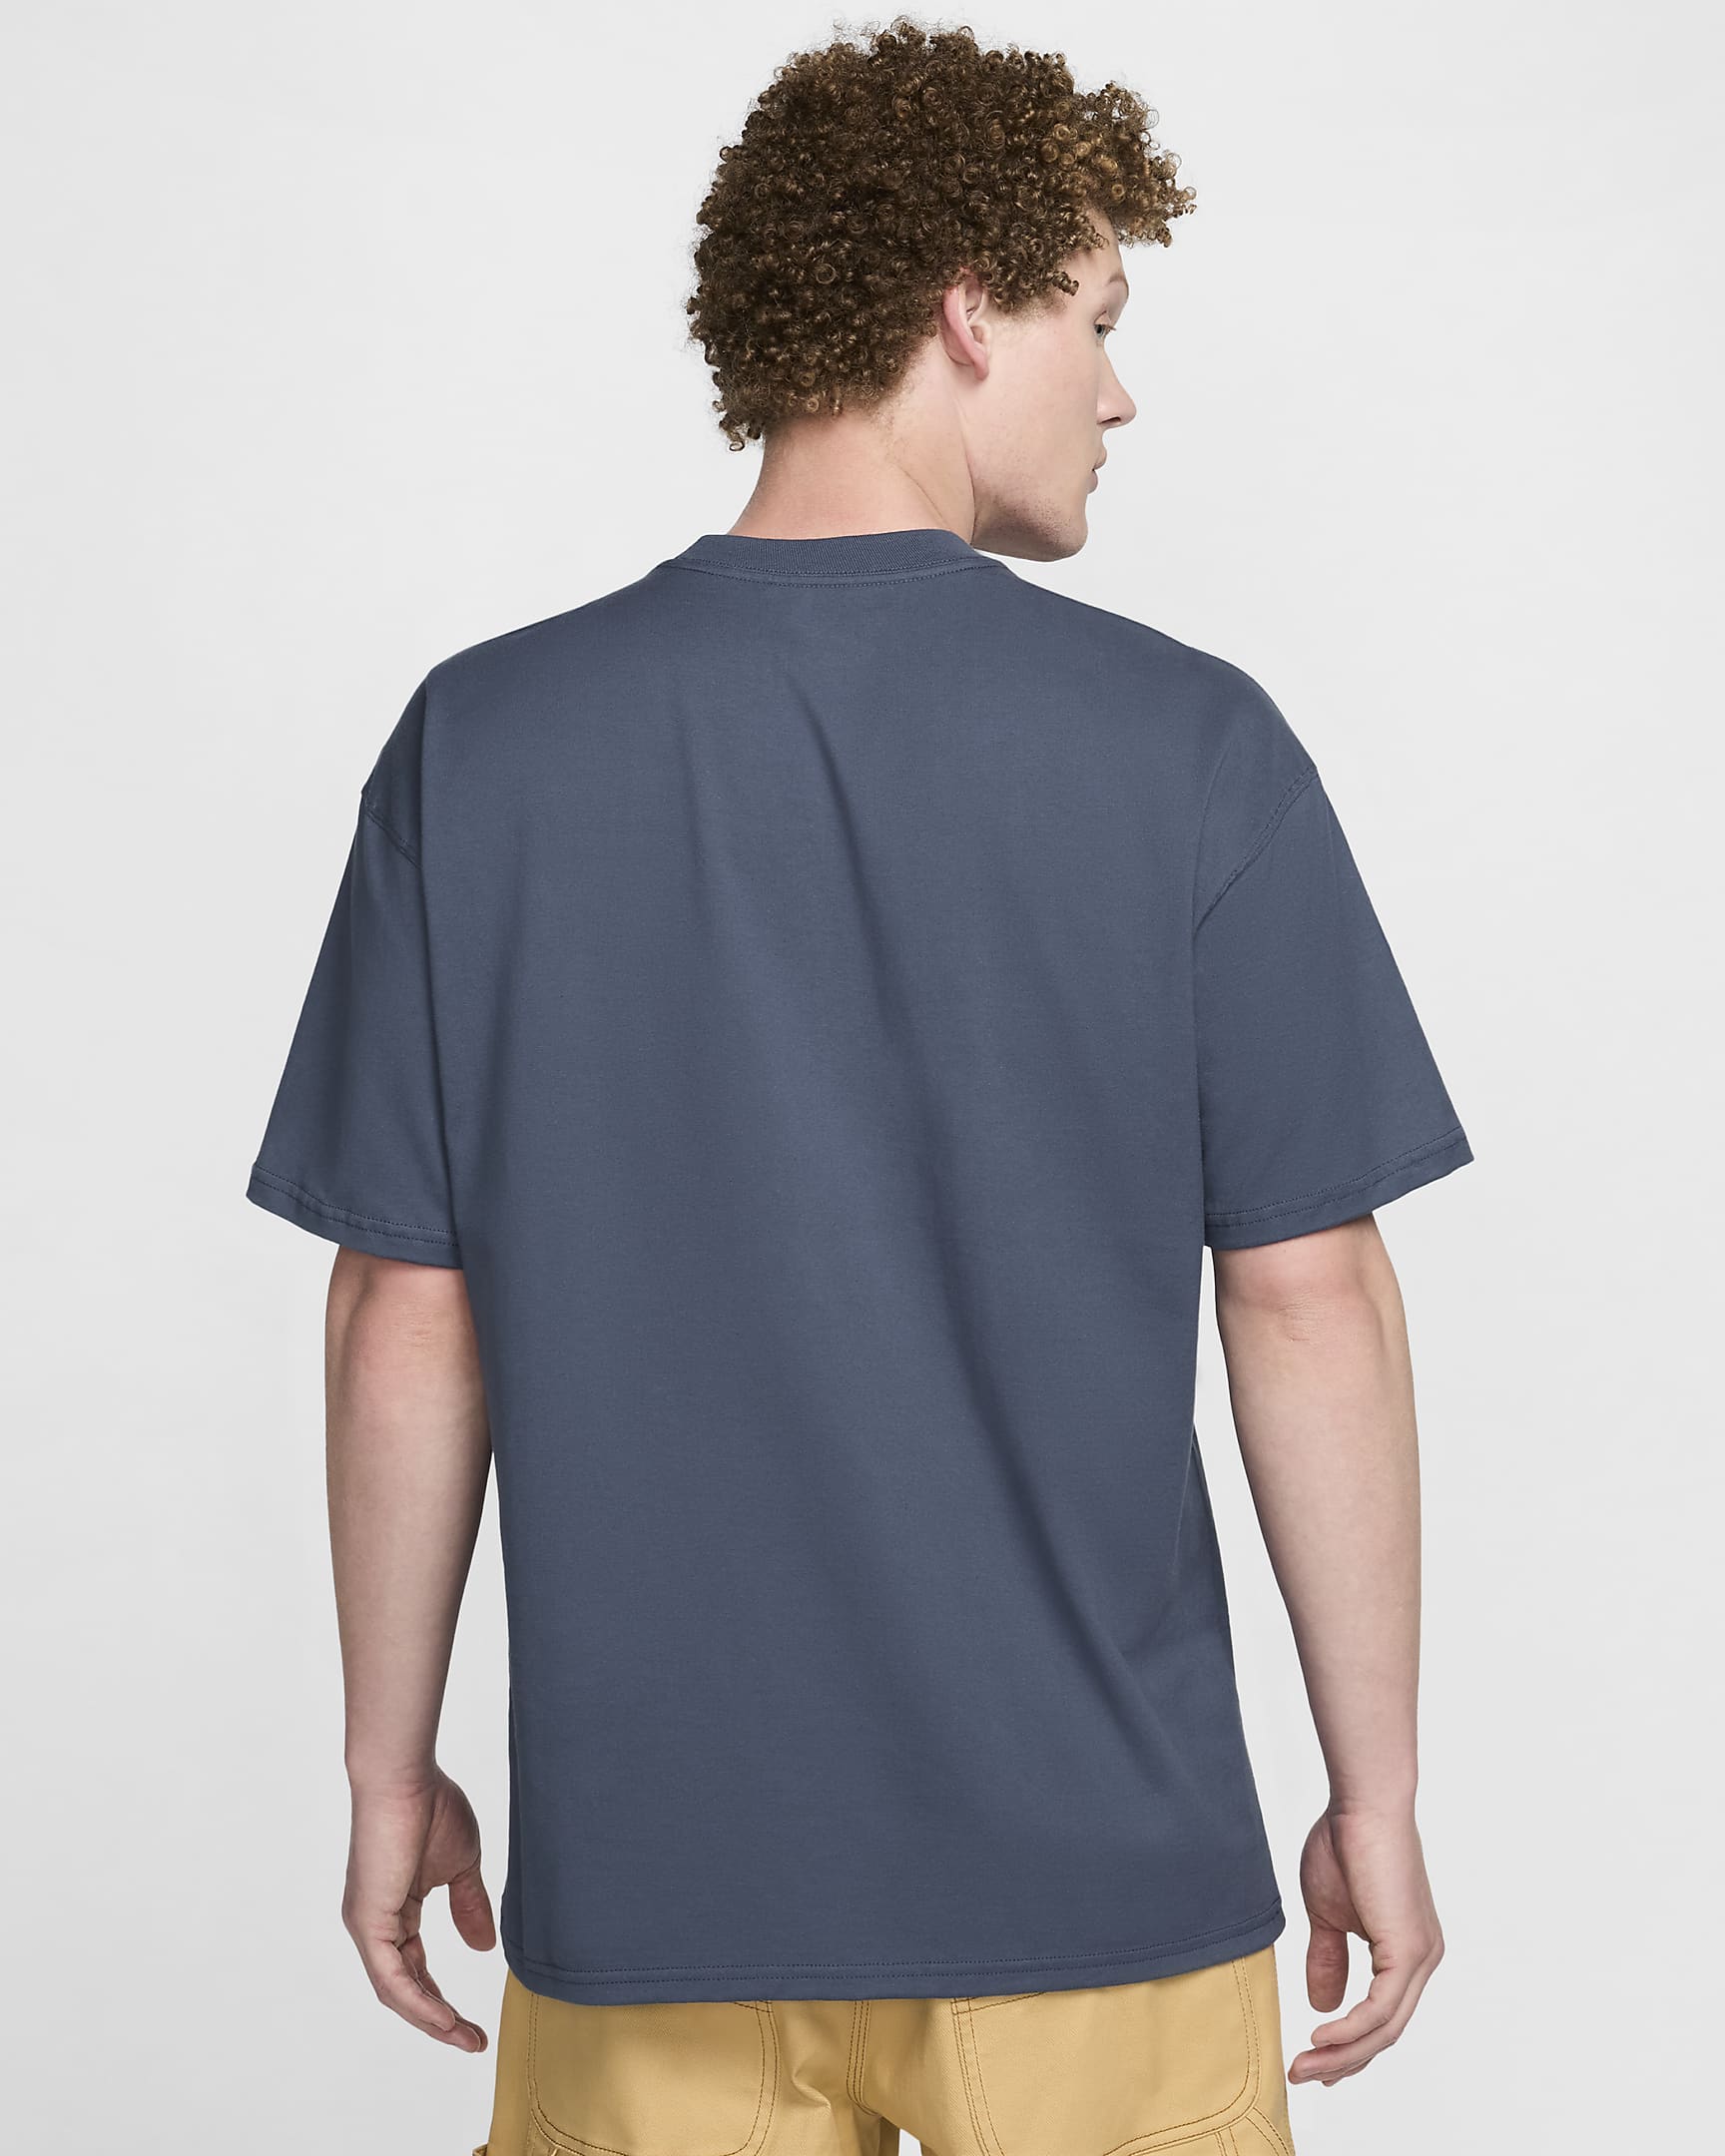 Nike Sportswear Men's Max90 T-Shirt - Thunder Blue